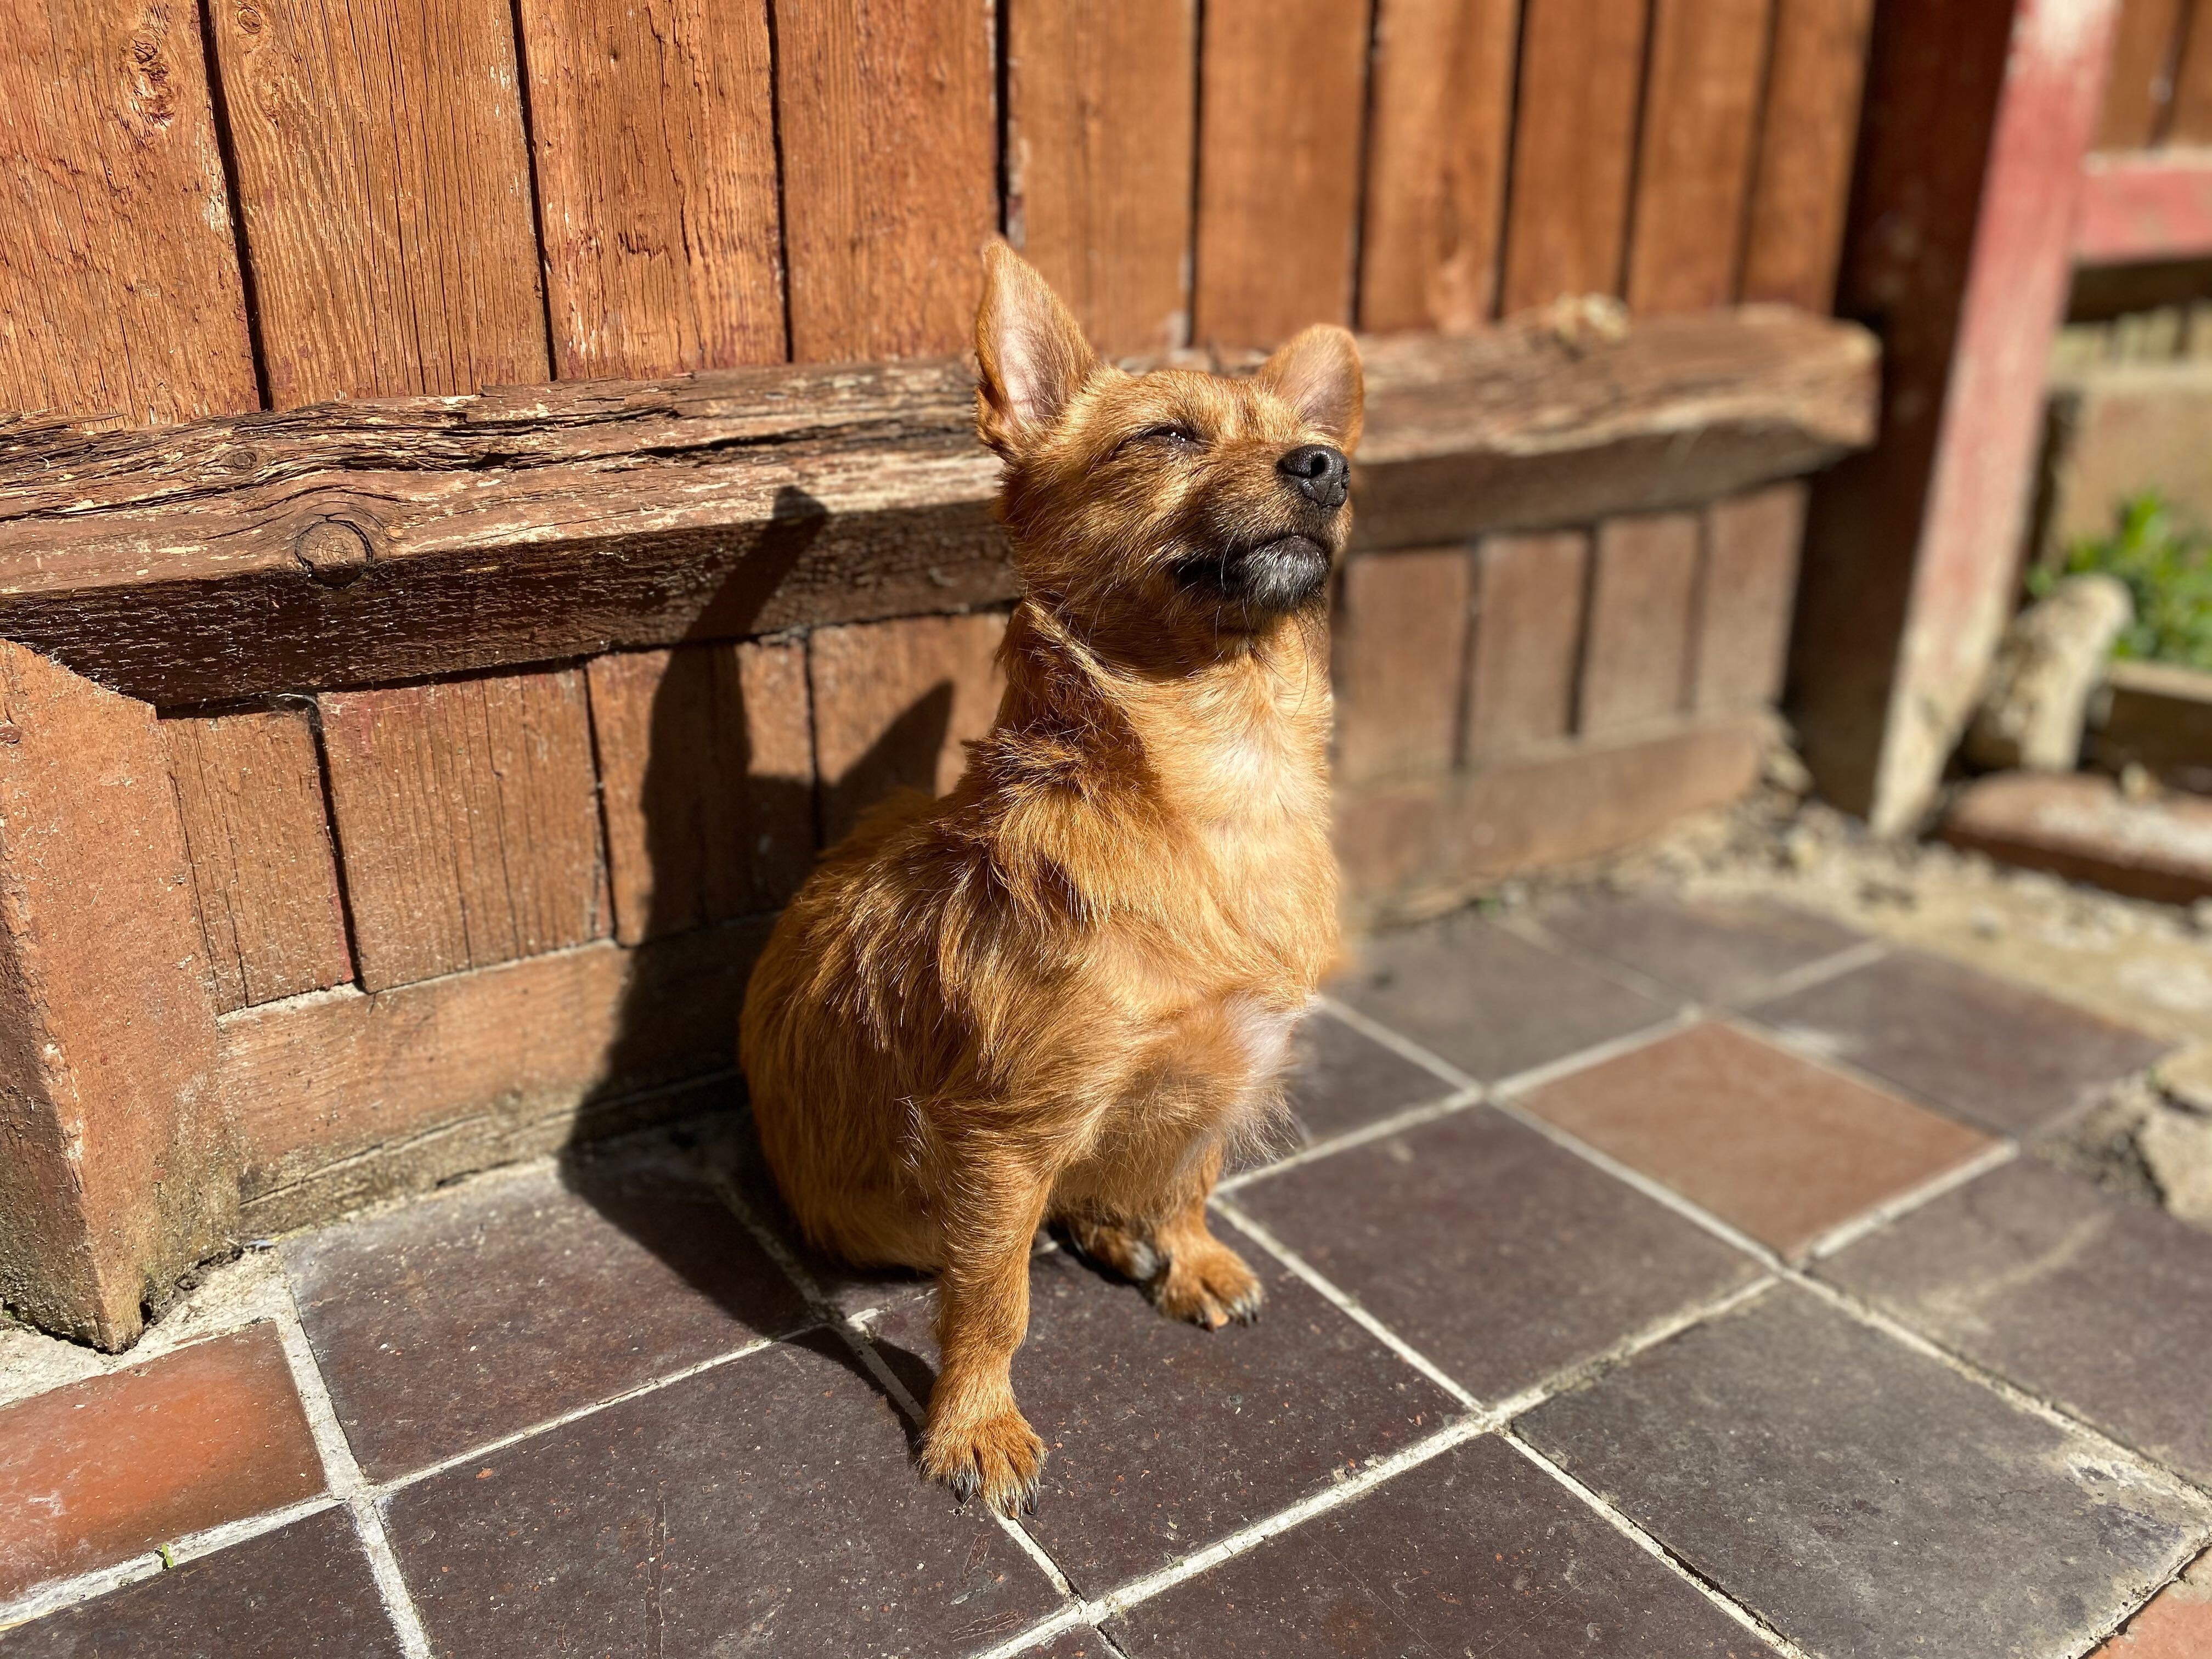 Bella basking in the sun